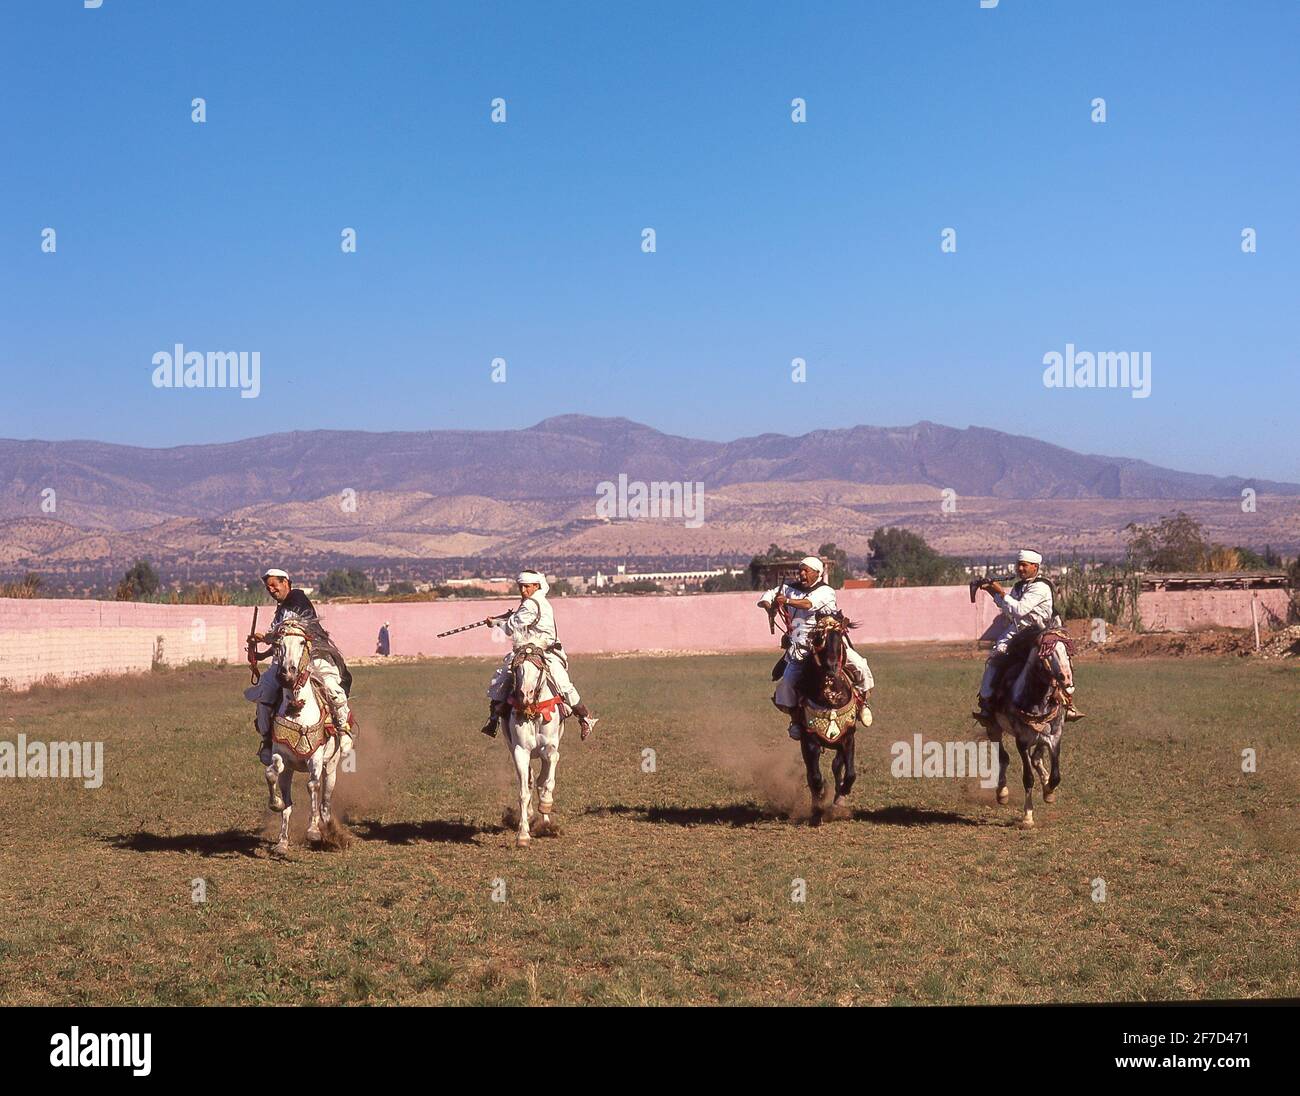 Horse-riding display at Fantasia Show, Agadir, Souss-Massa-Draâ Region, Morocco Stock Photo